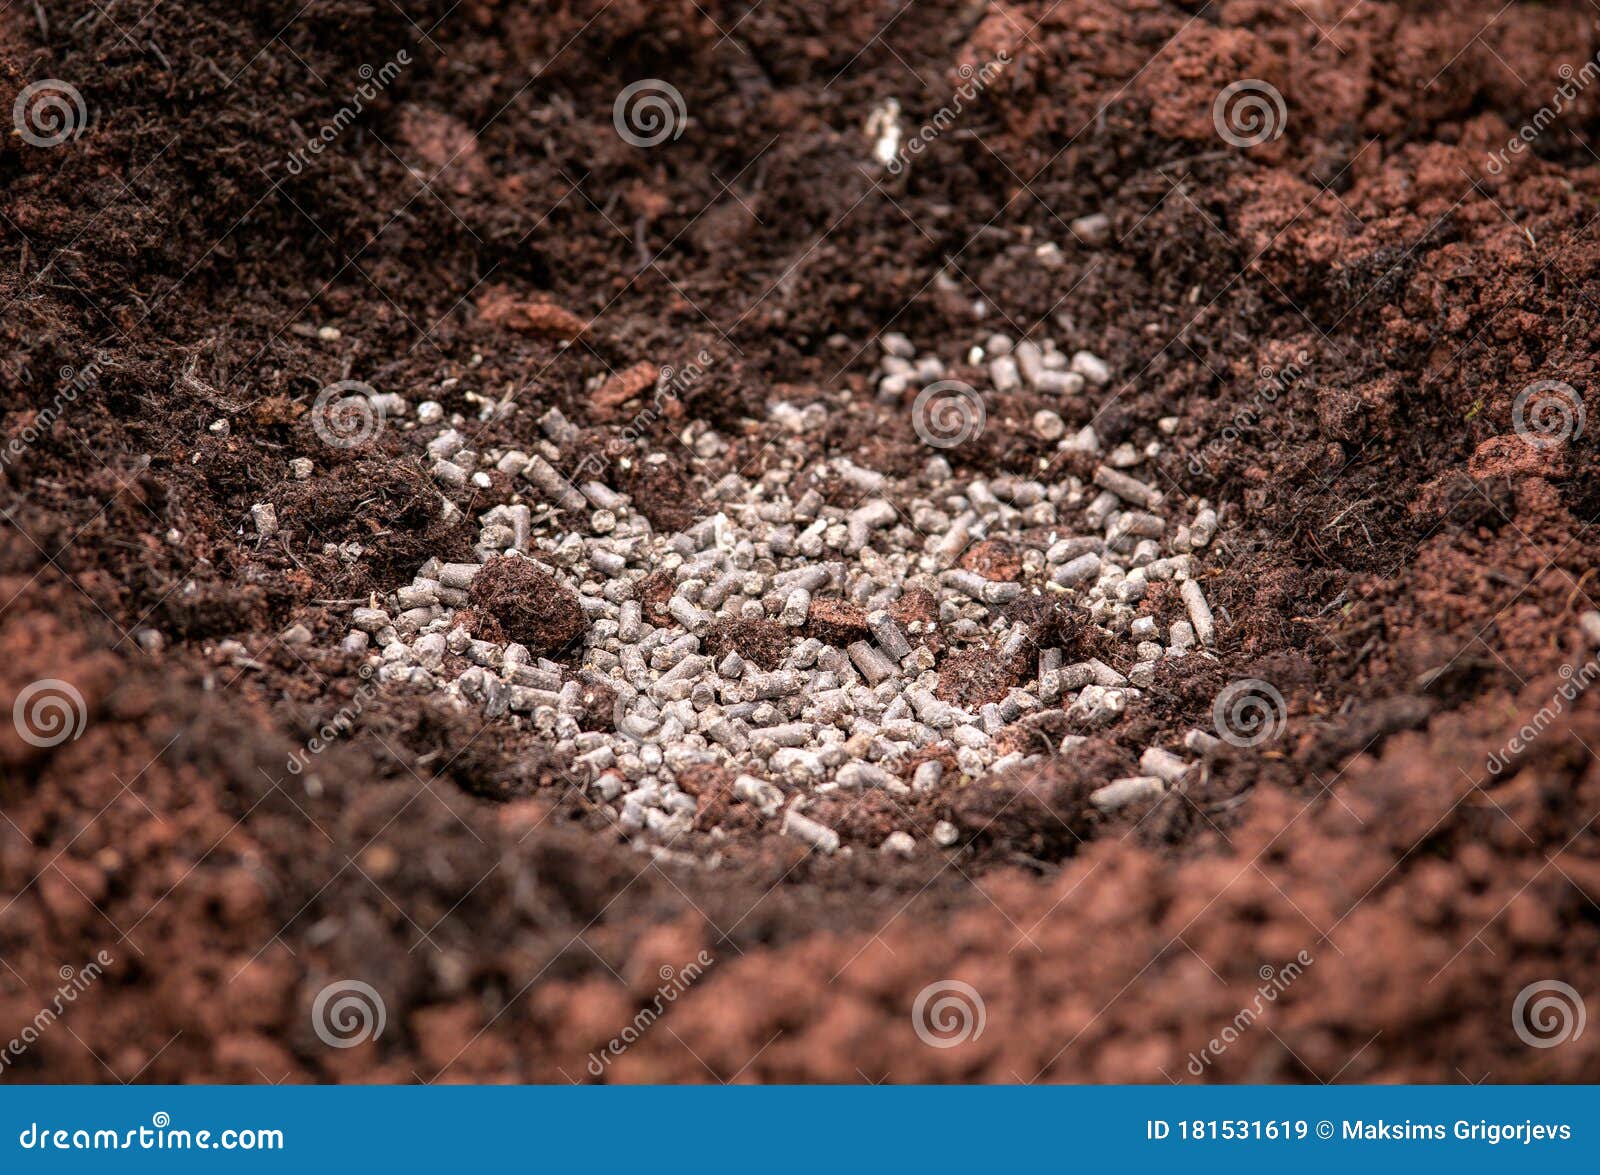 adding chicken manure pellets to soil ground for planting in garden